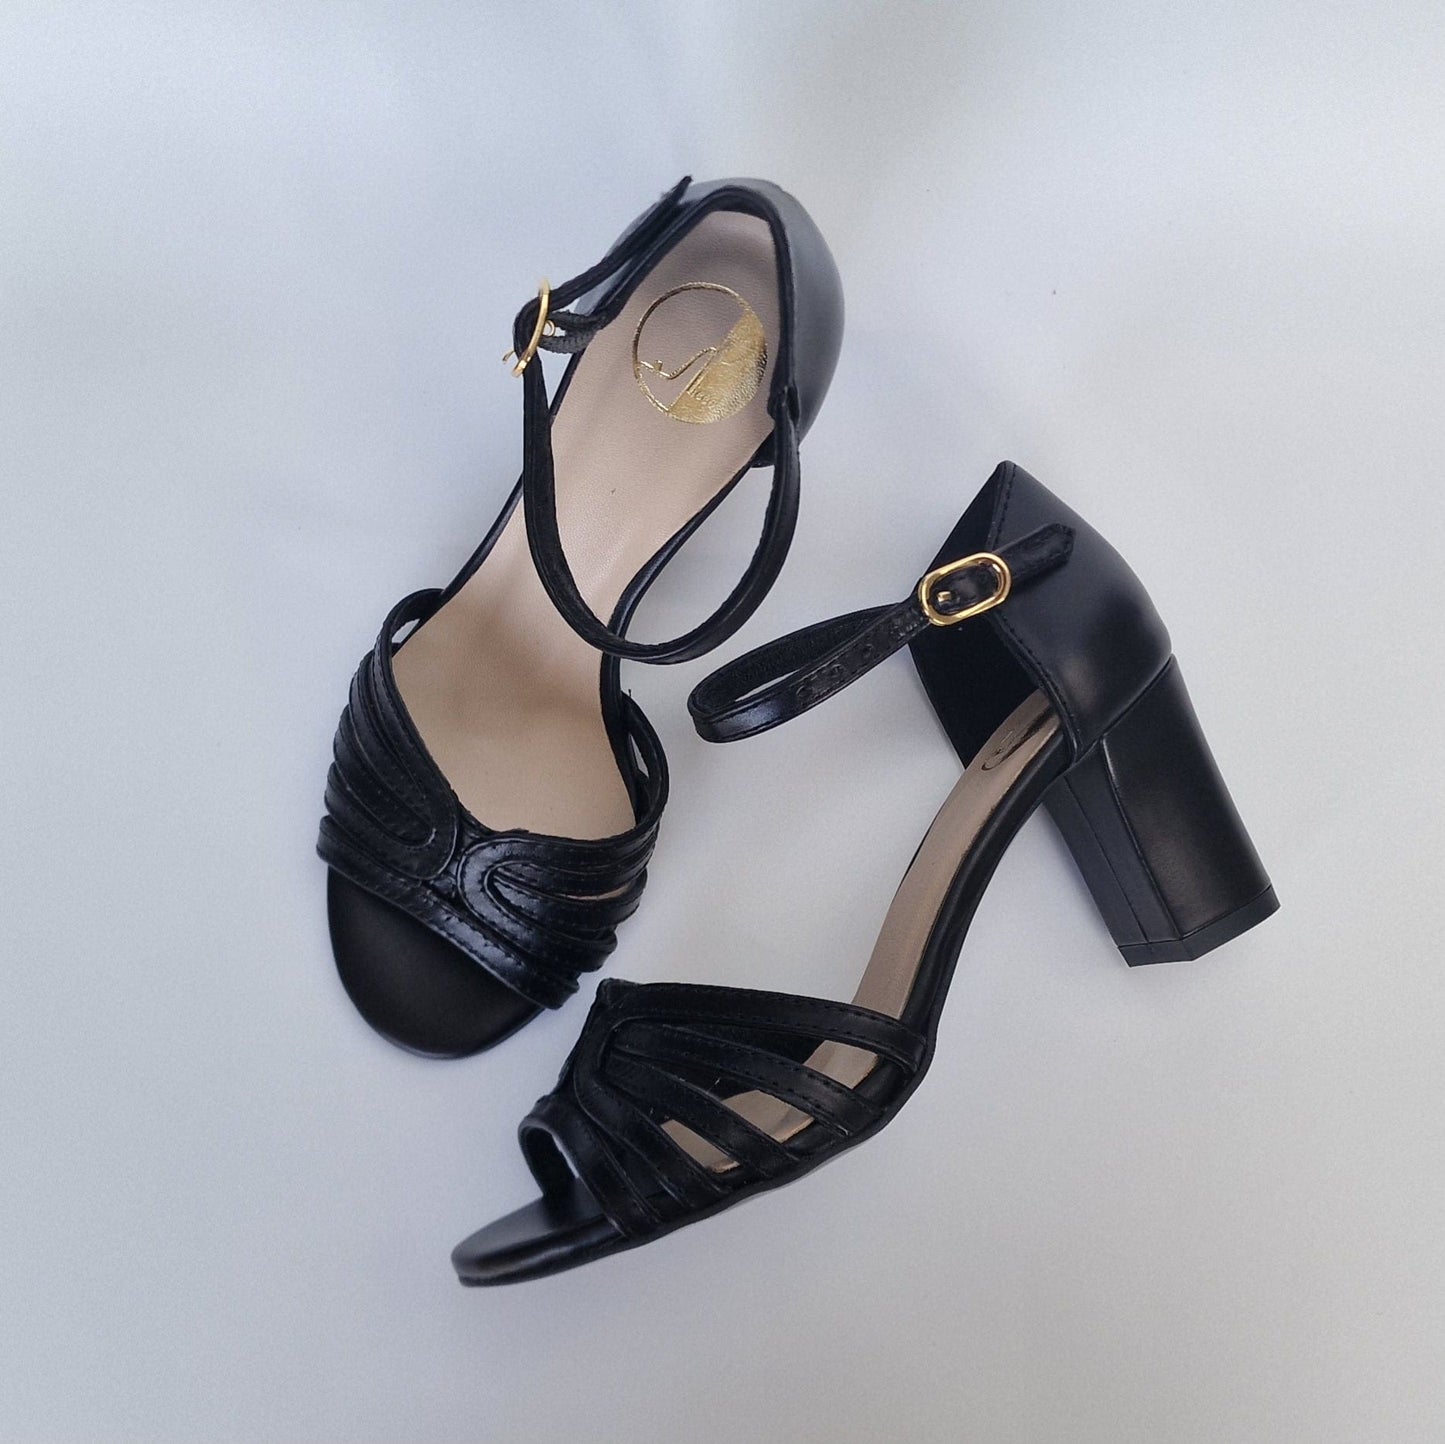 Black leather block heel small size ladies sandals